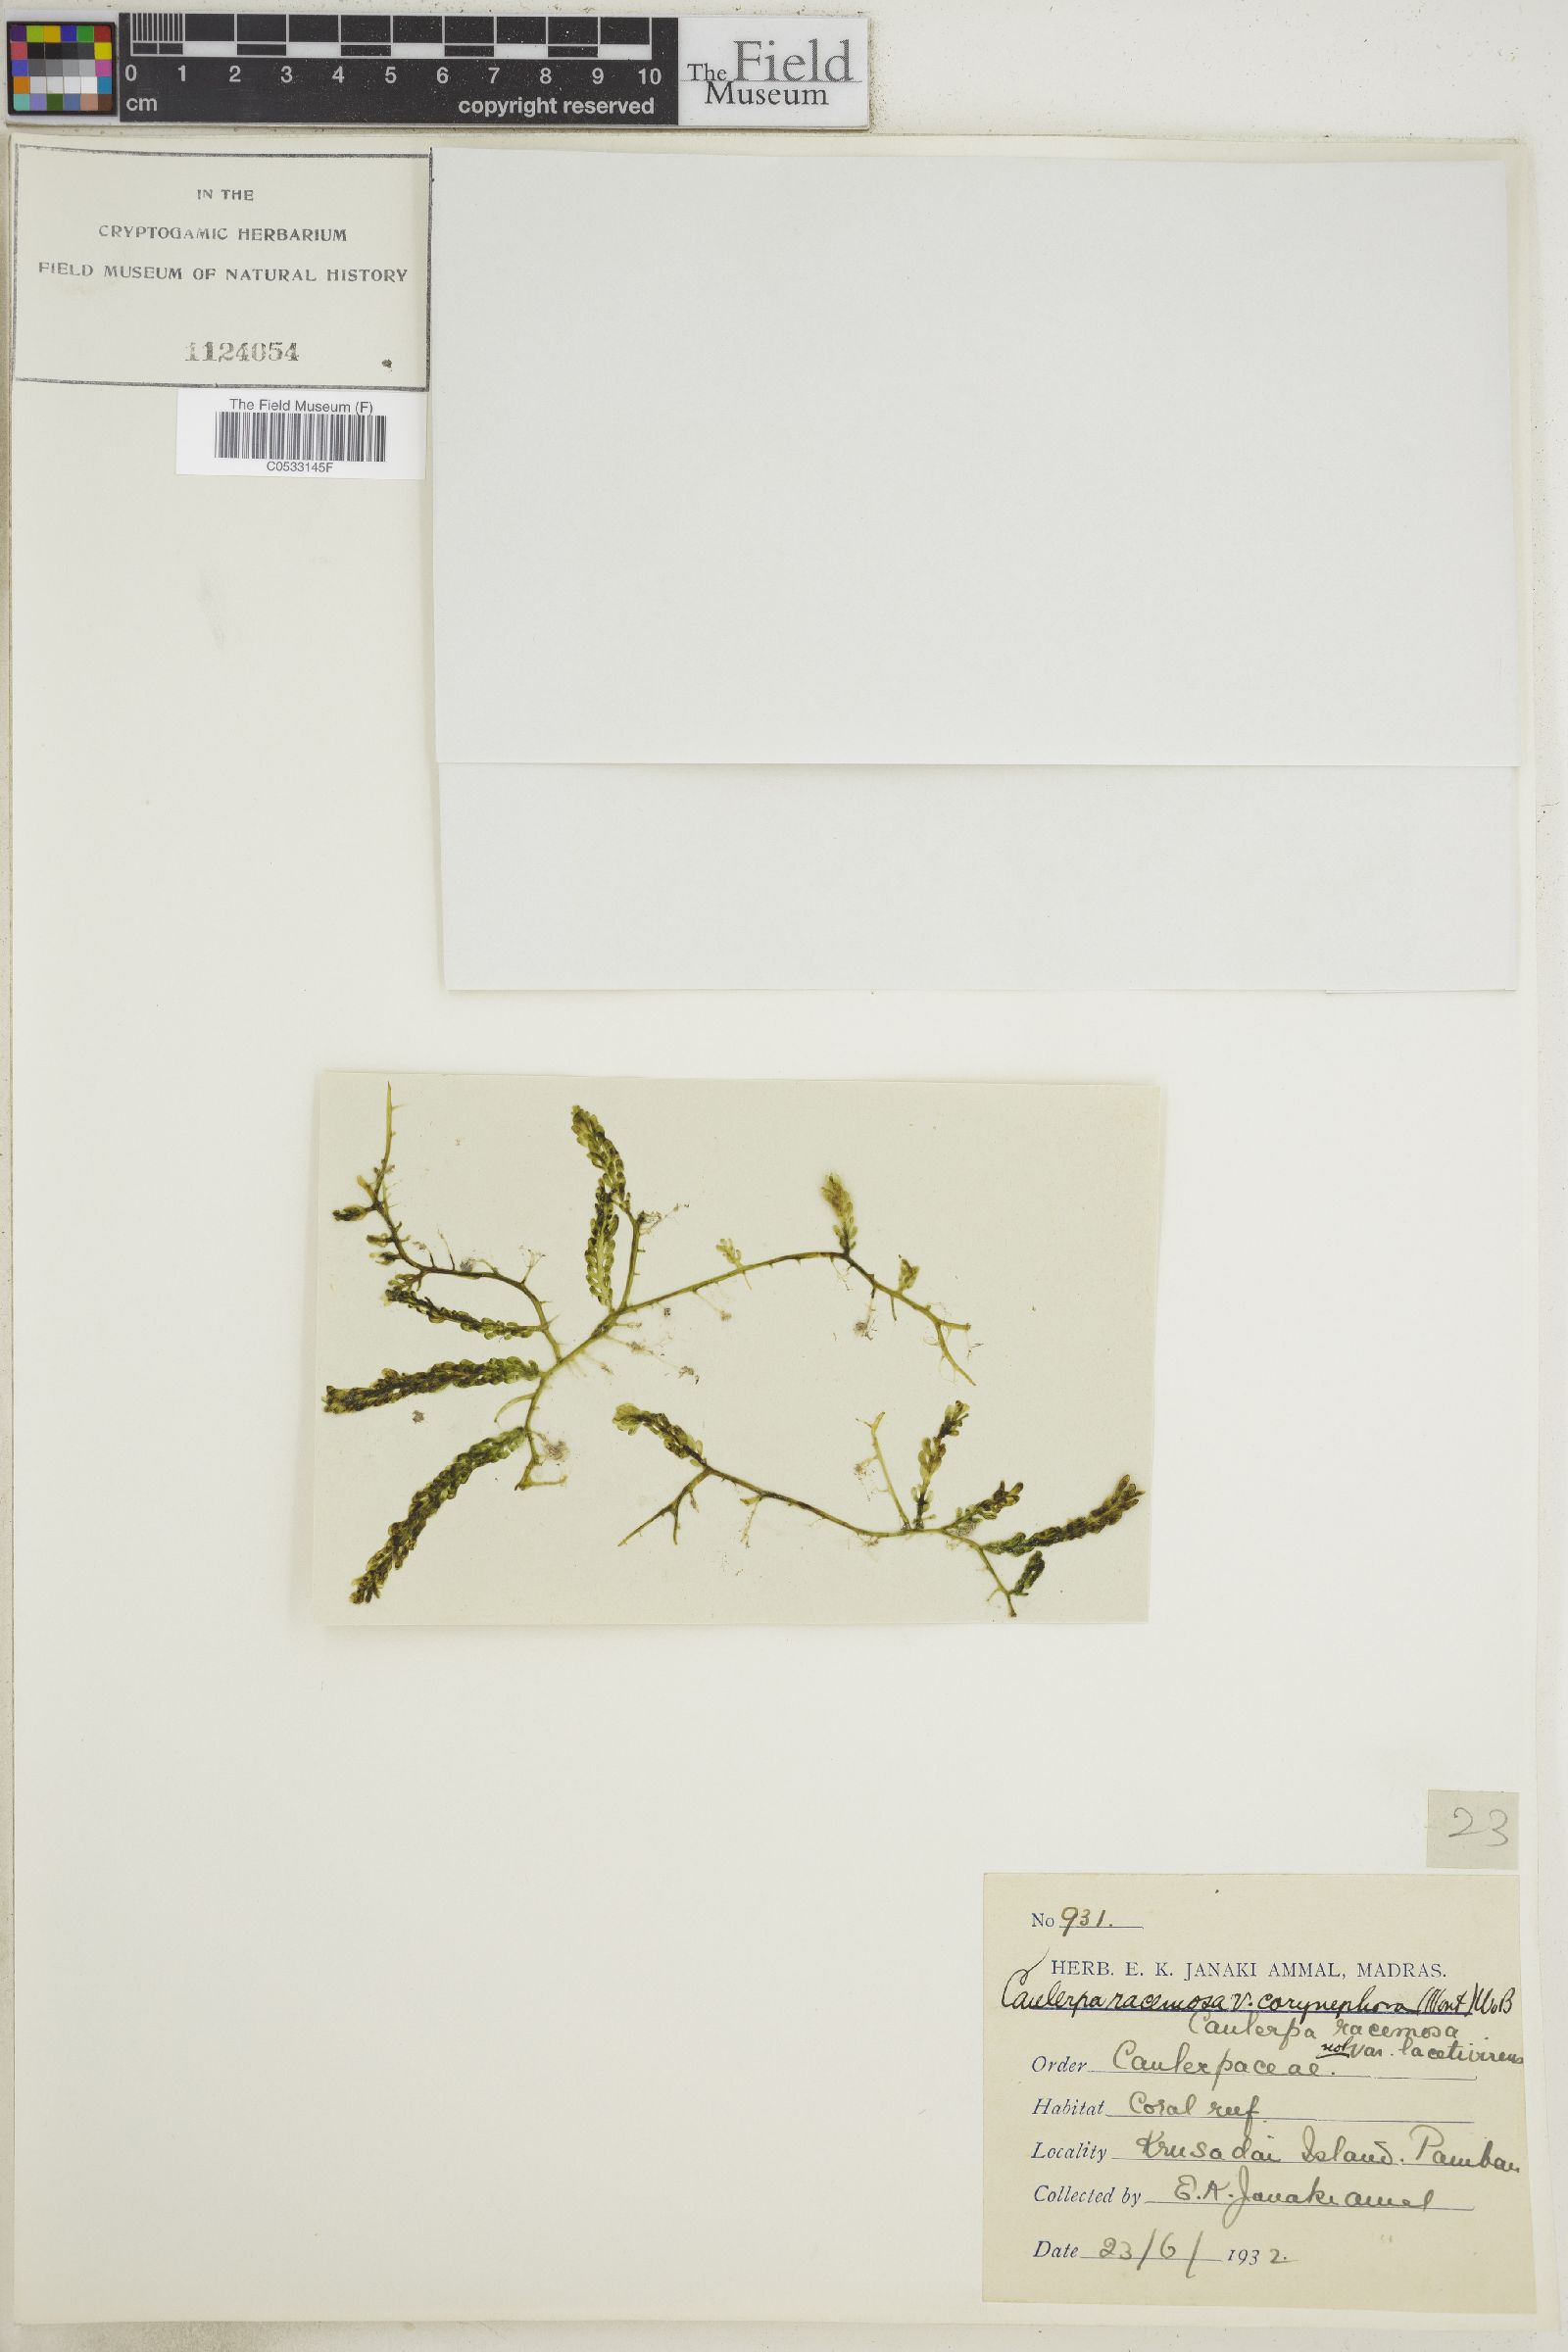 Caulerpa corynephora image